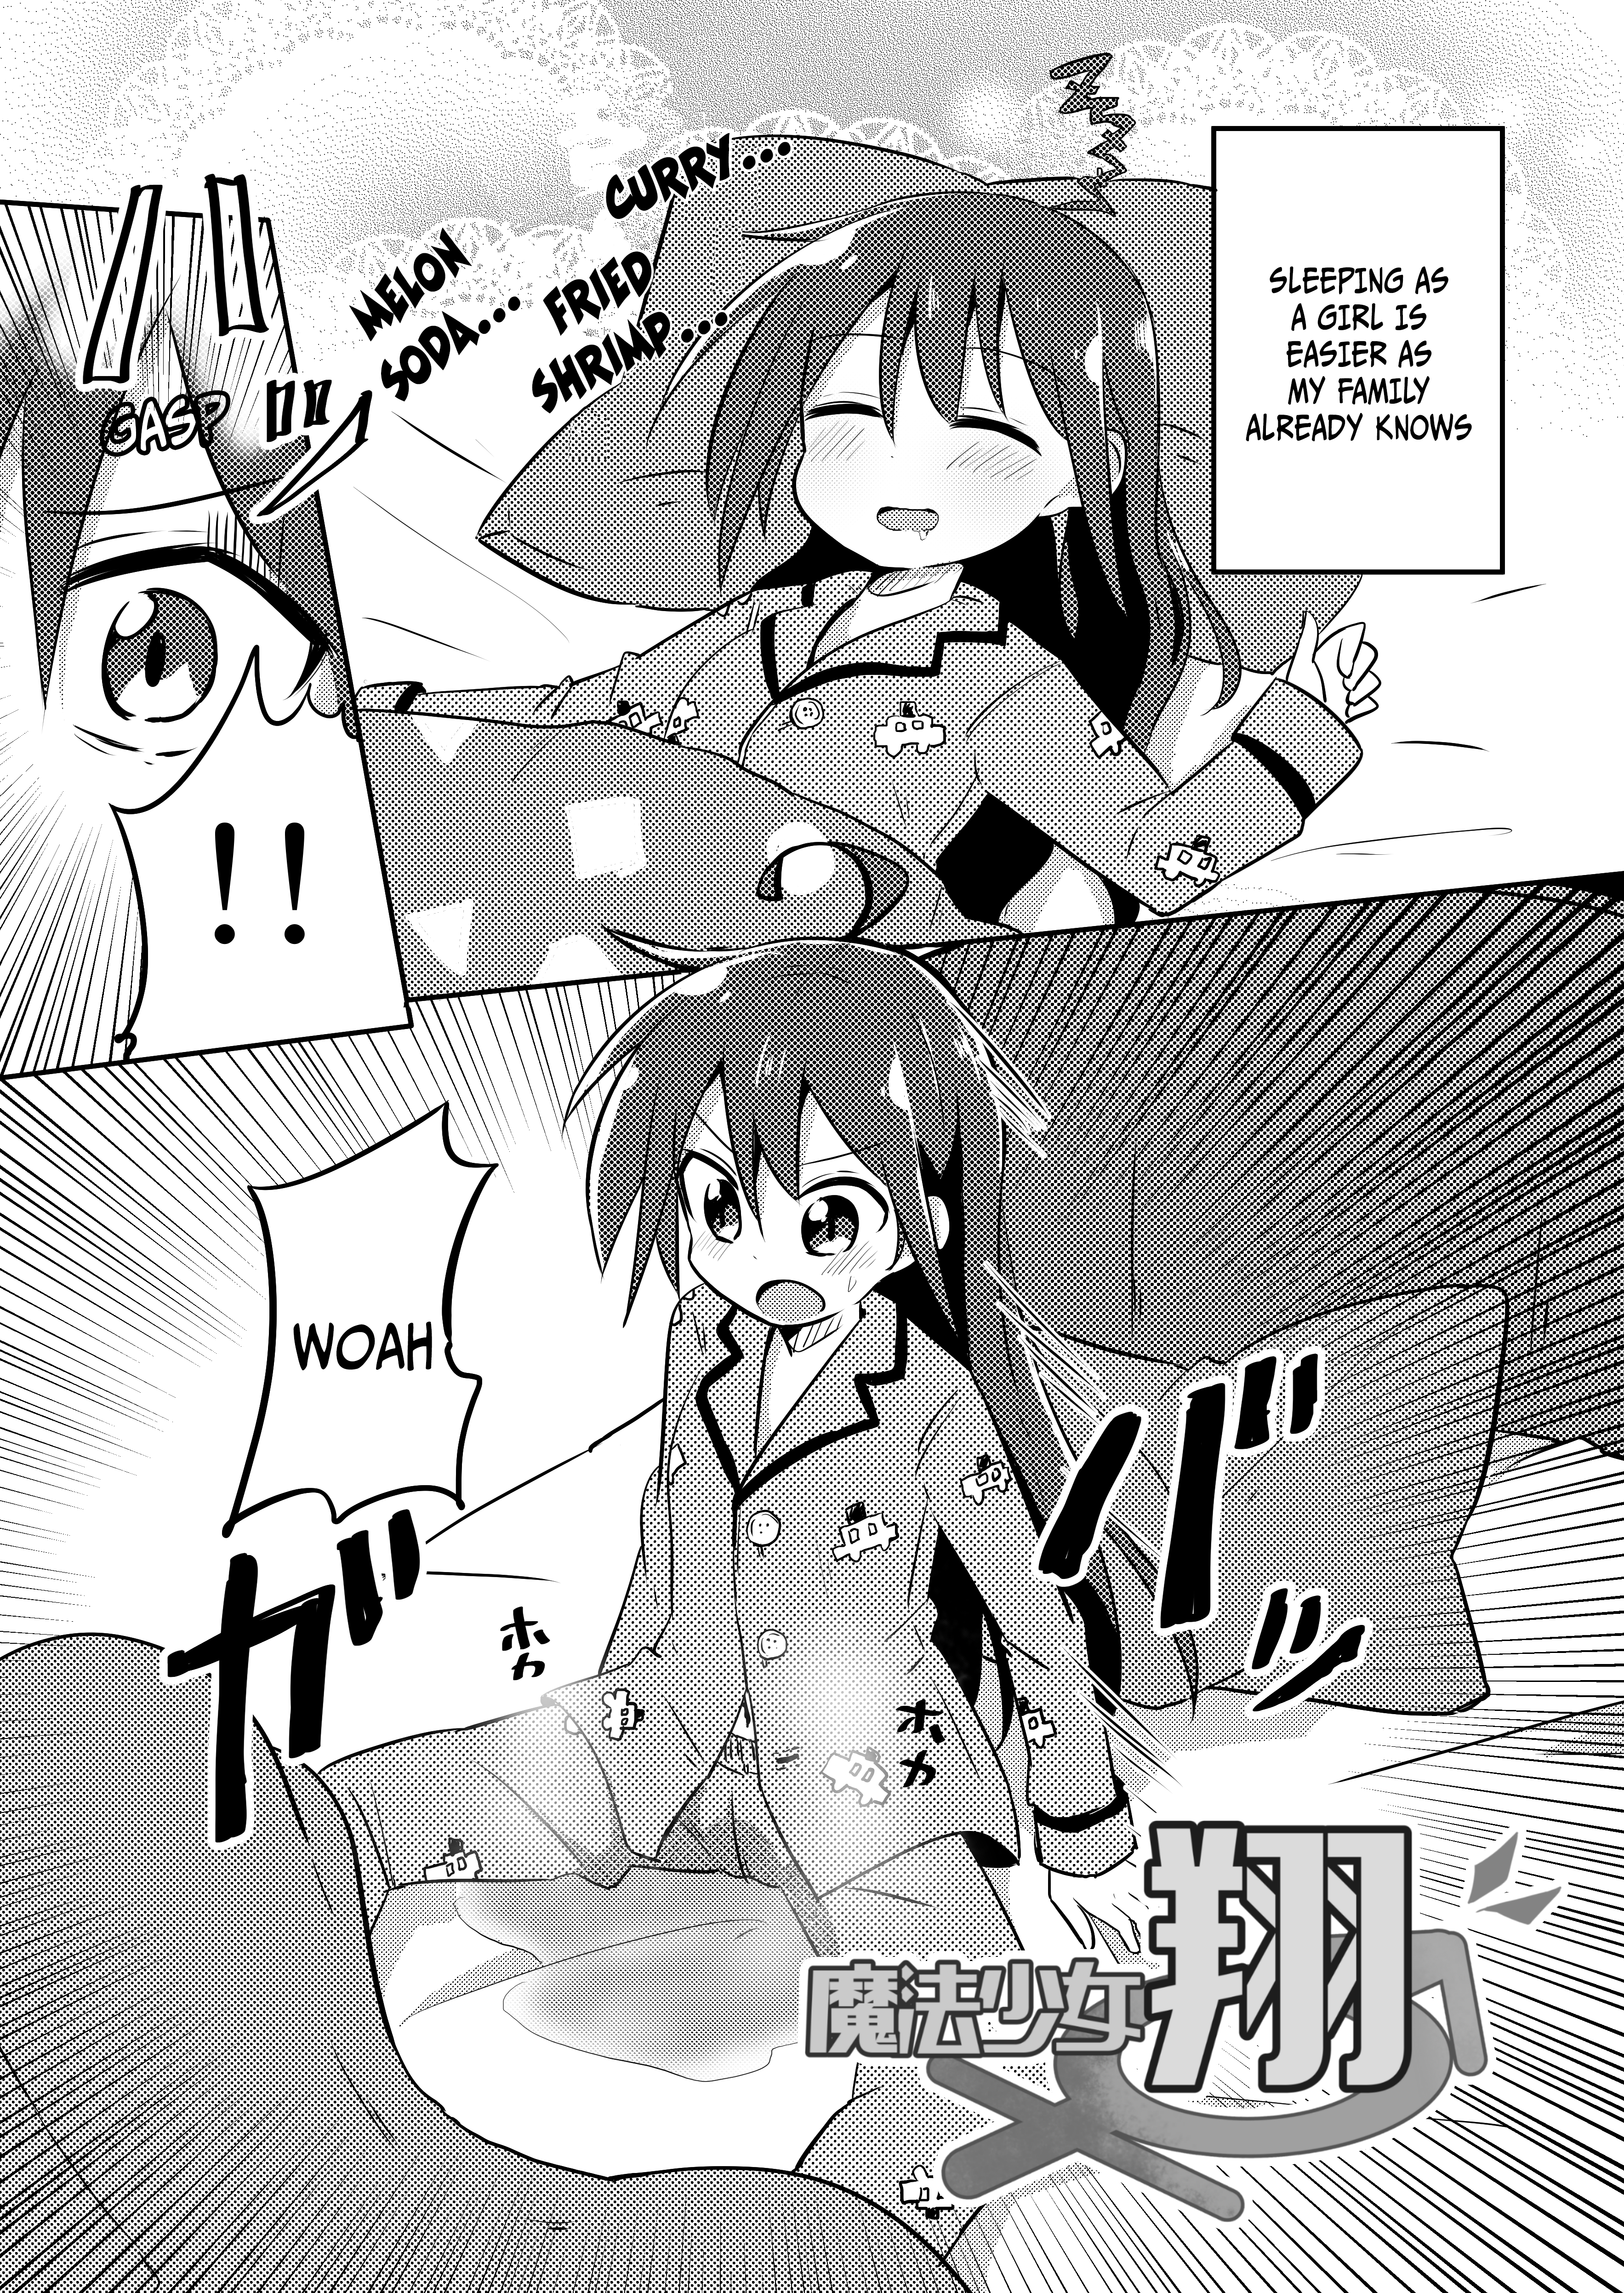 Magical Girl Kakeru - 8 page 1-1e2eadb3